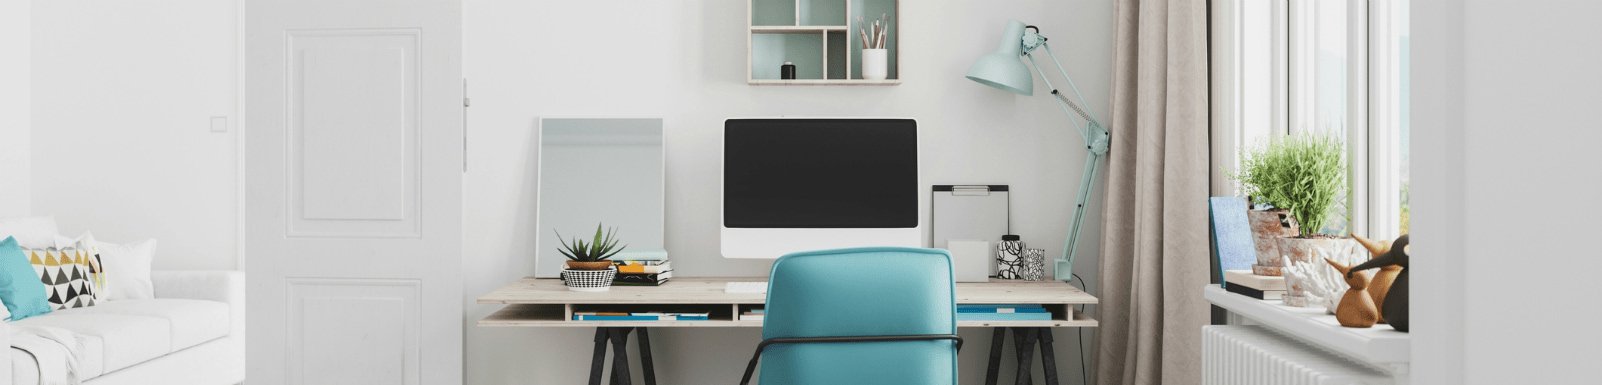 Home office setup modern minimalist